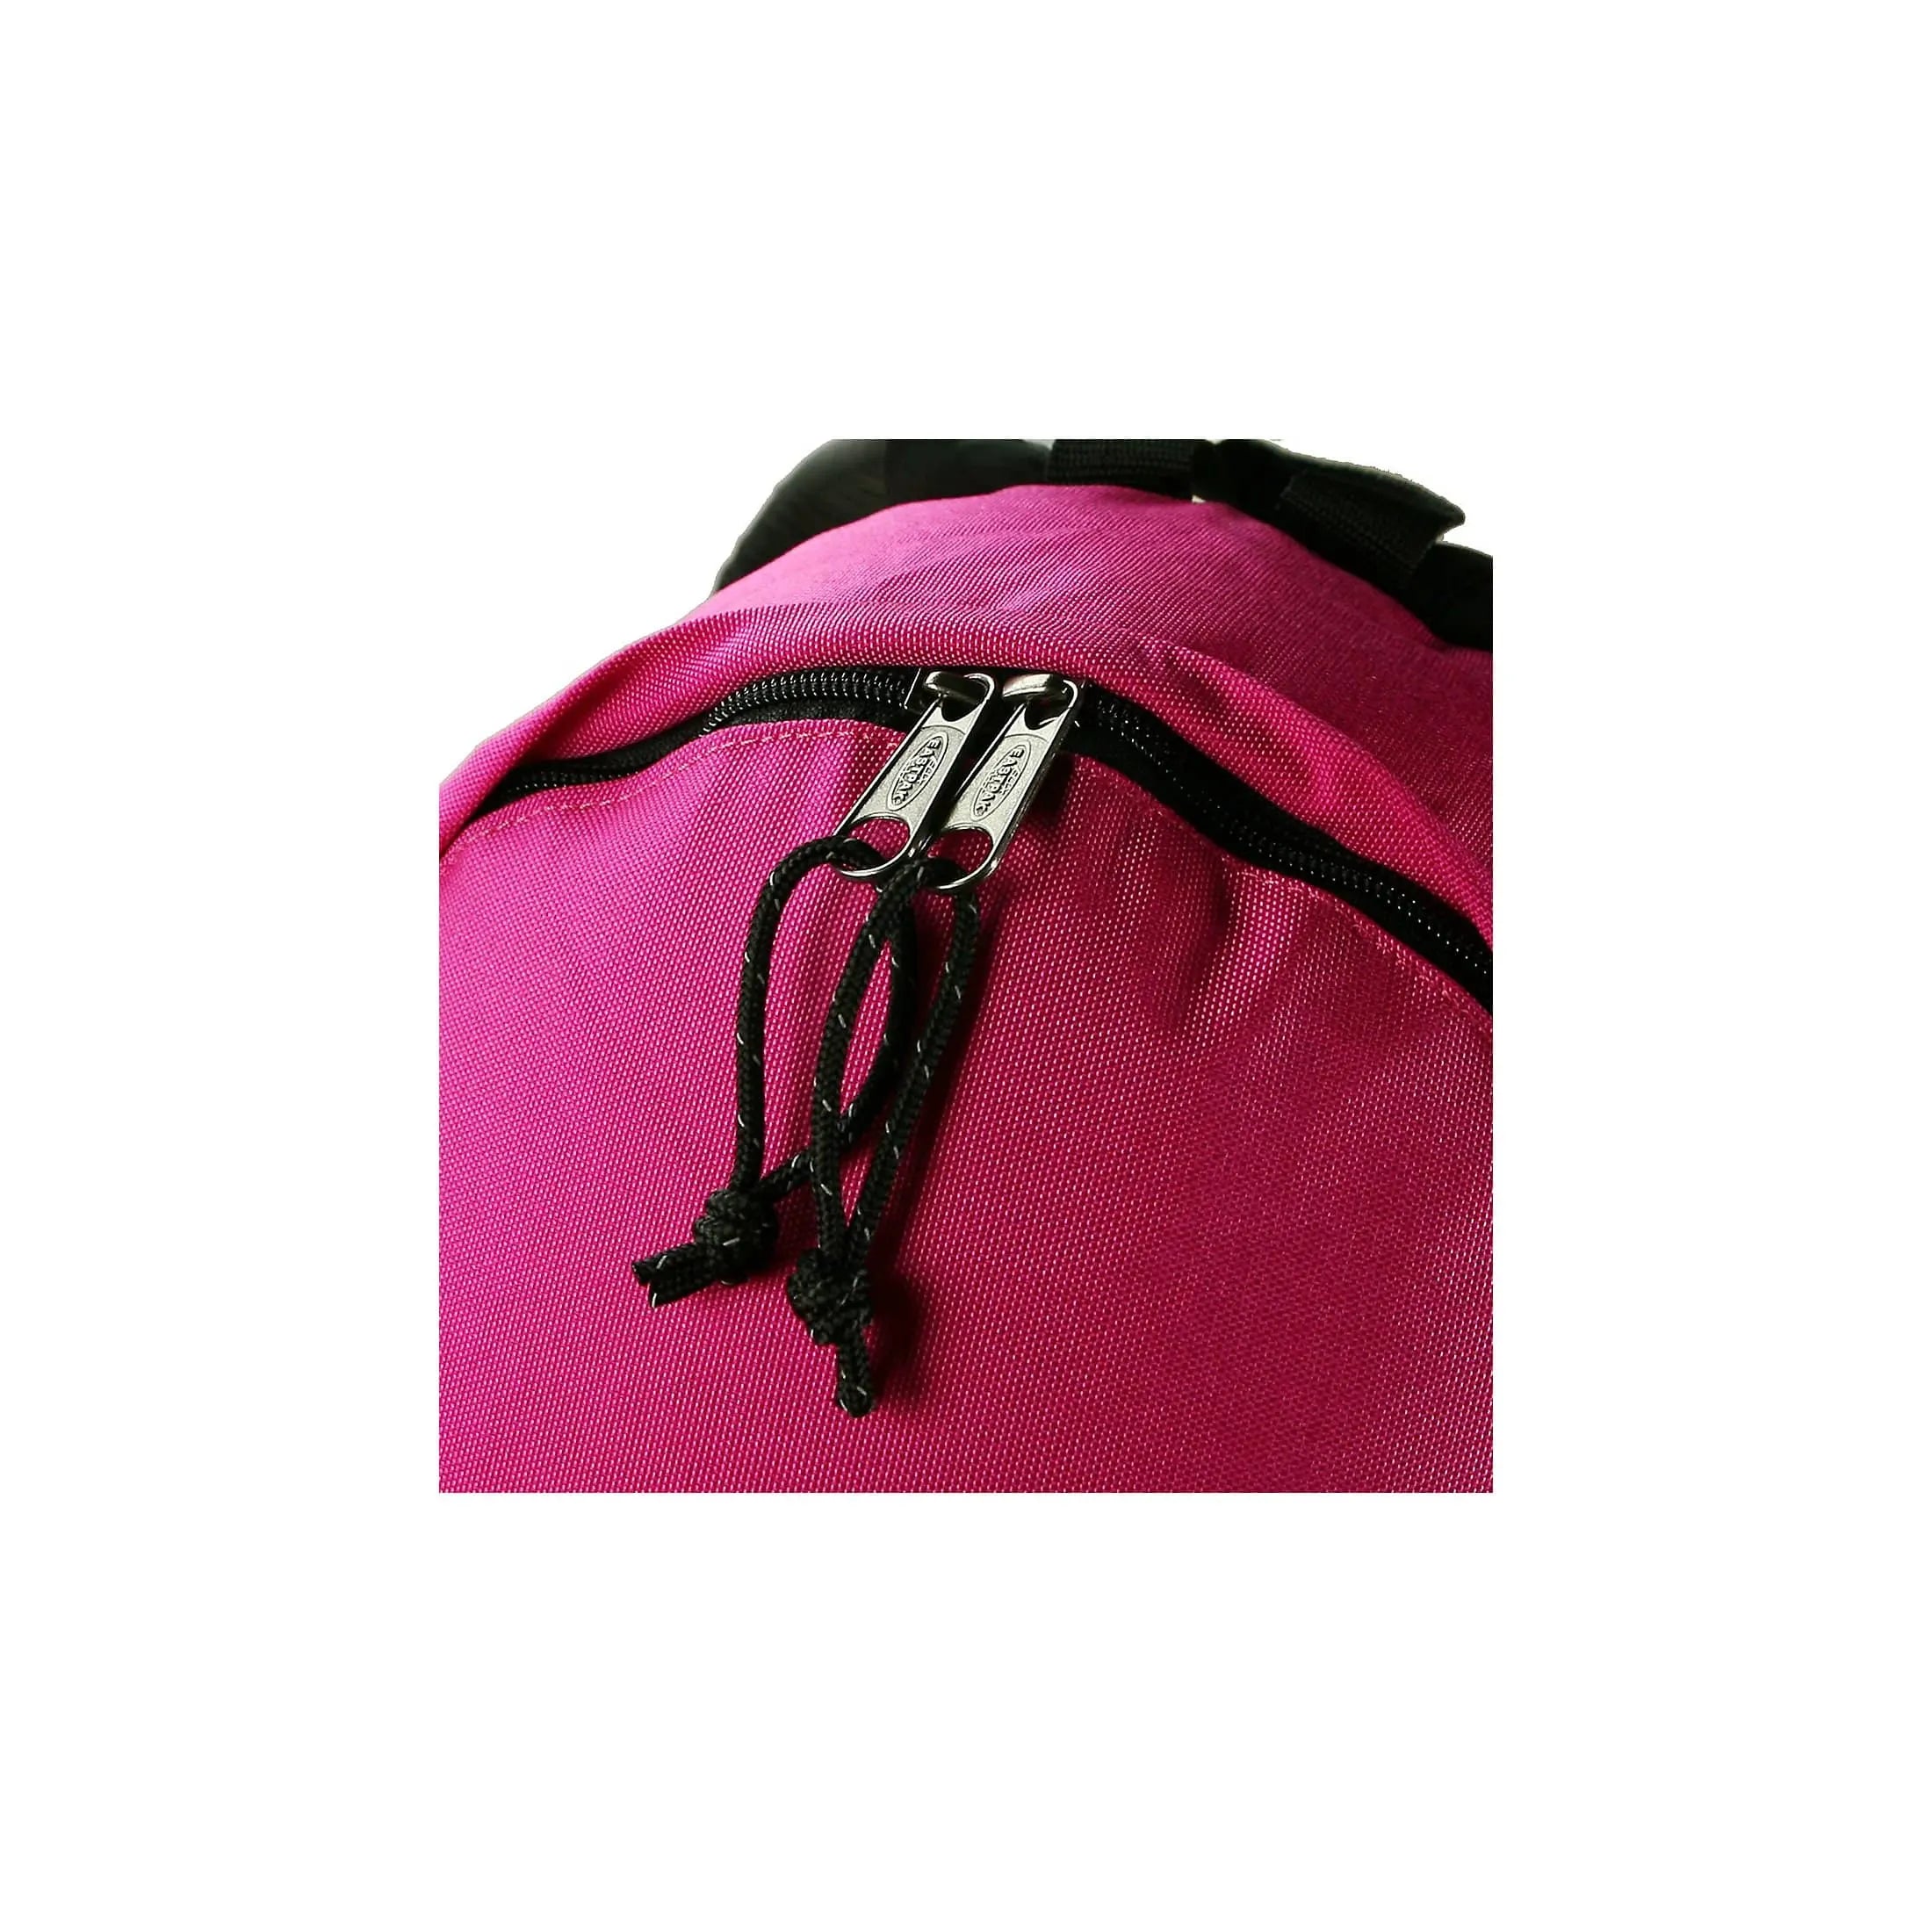 Eastpak Authentic Orbit leisure backpack 33 cm - Sailor Red